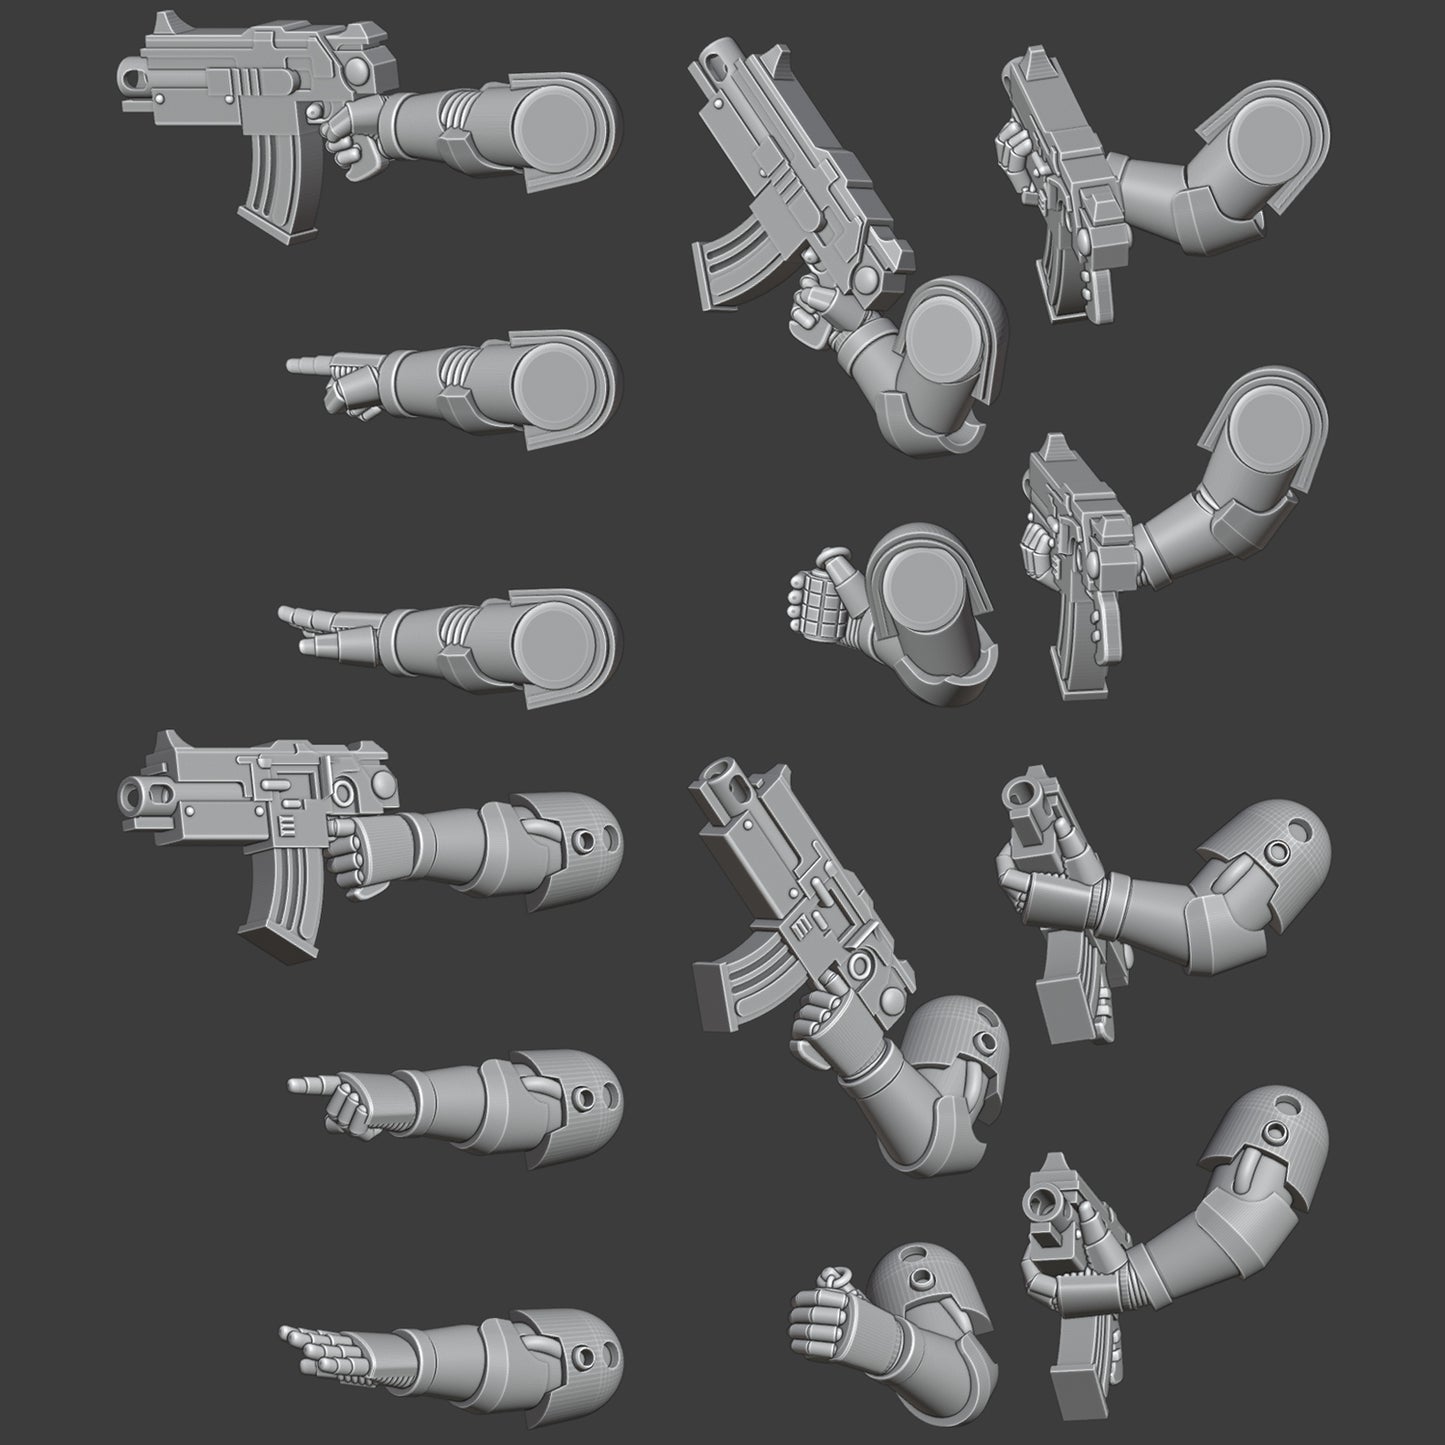 GEN 6 RIVET-GUN ARMS x10 Custom Prints